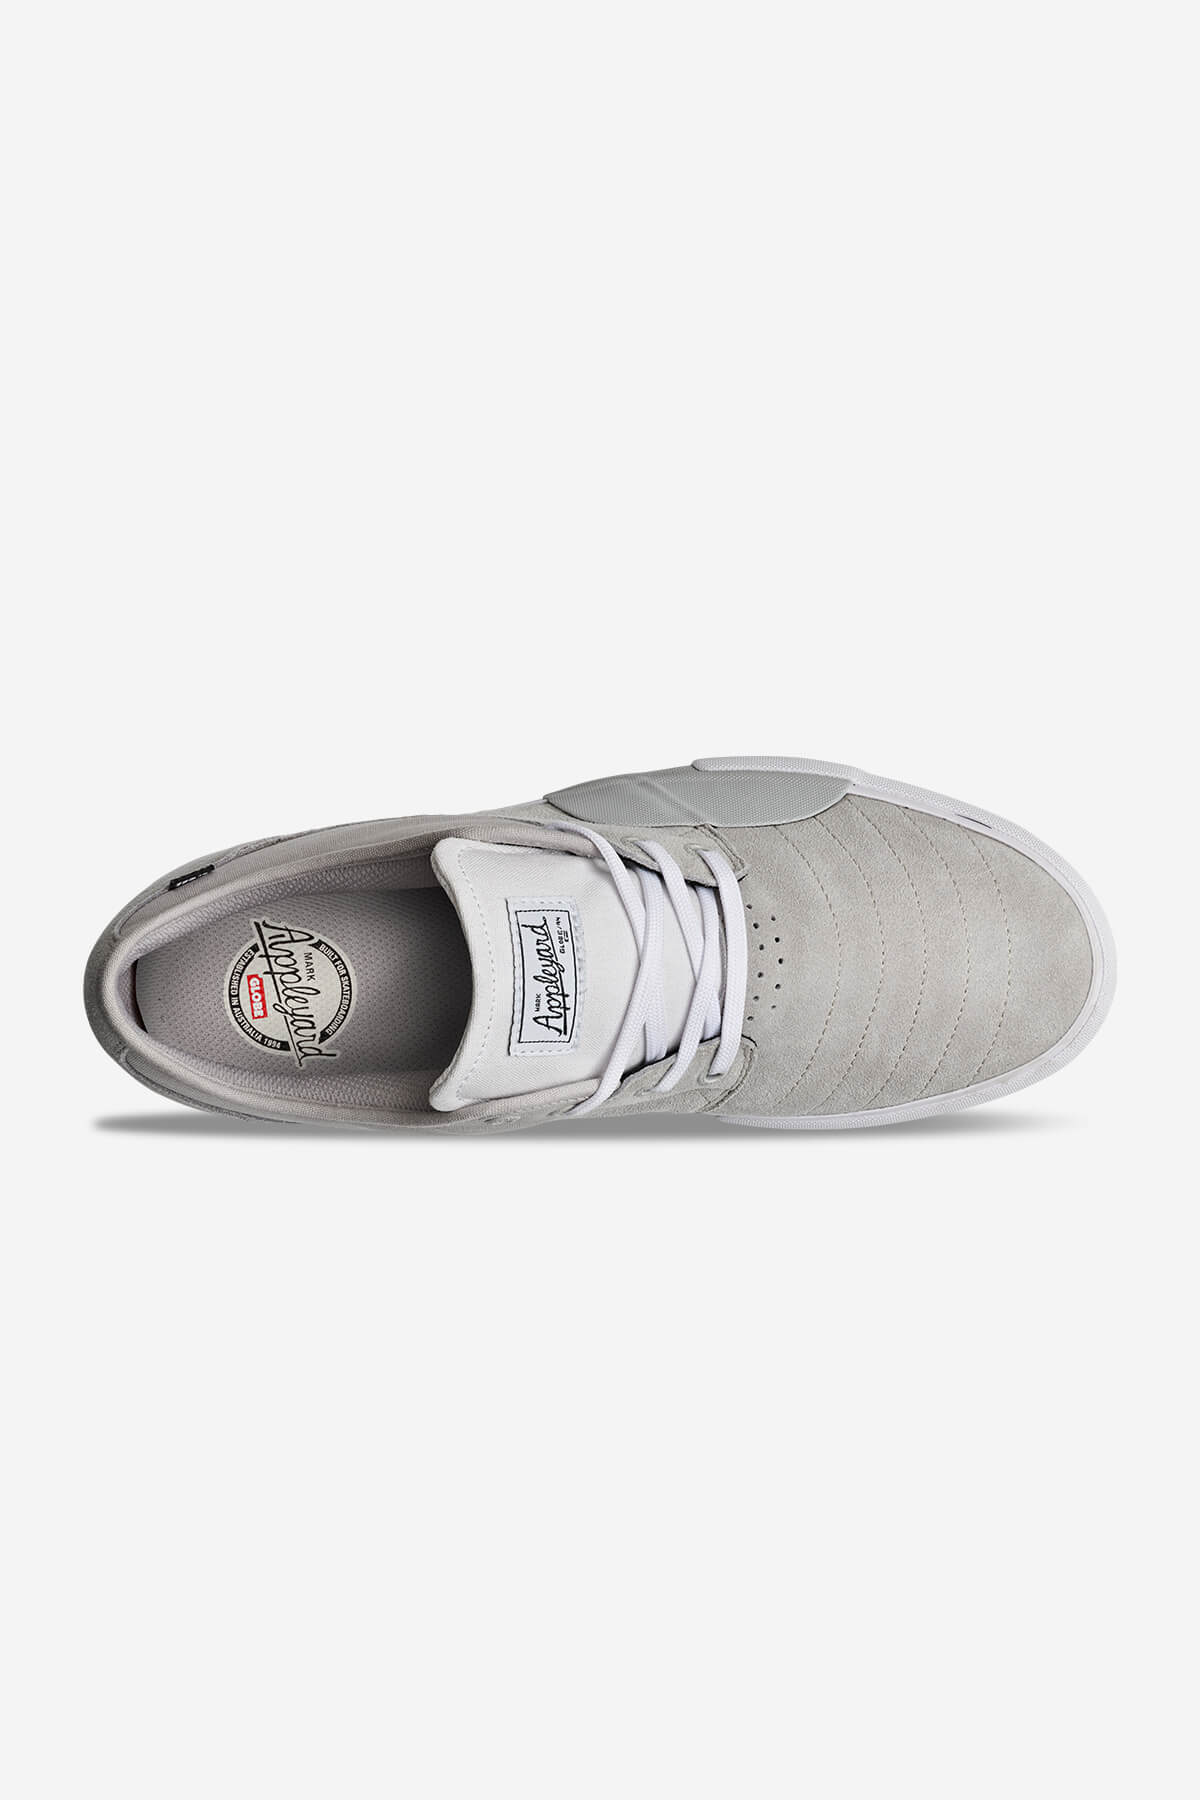 Globe - Mahalo Plus - Grau/White - skateboard Schuhe